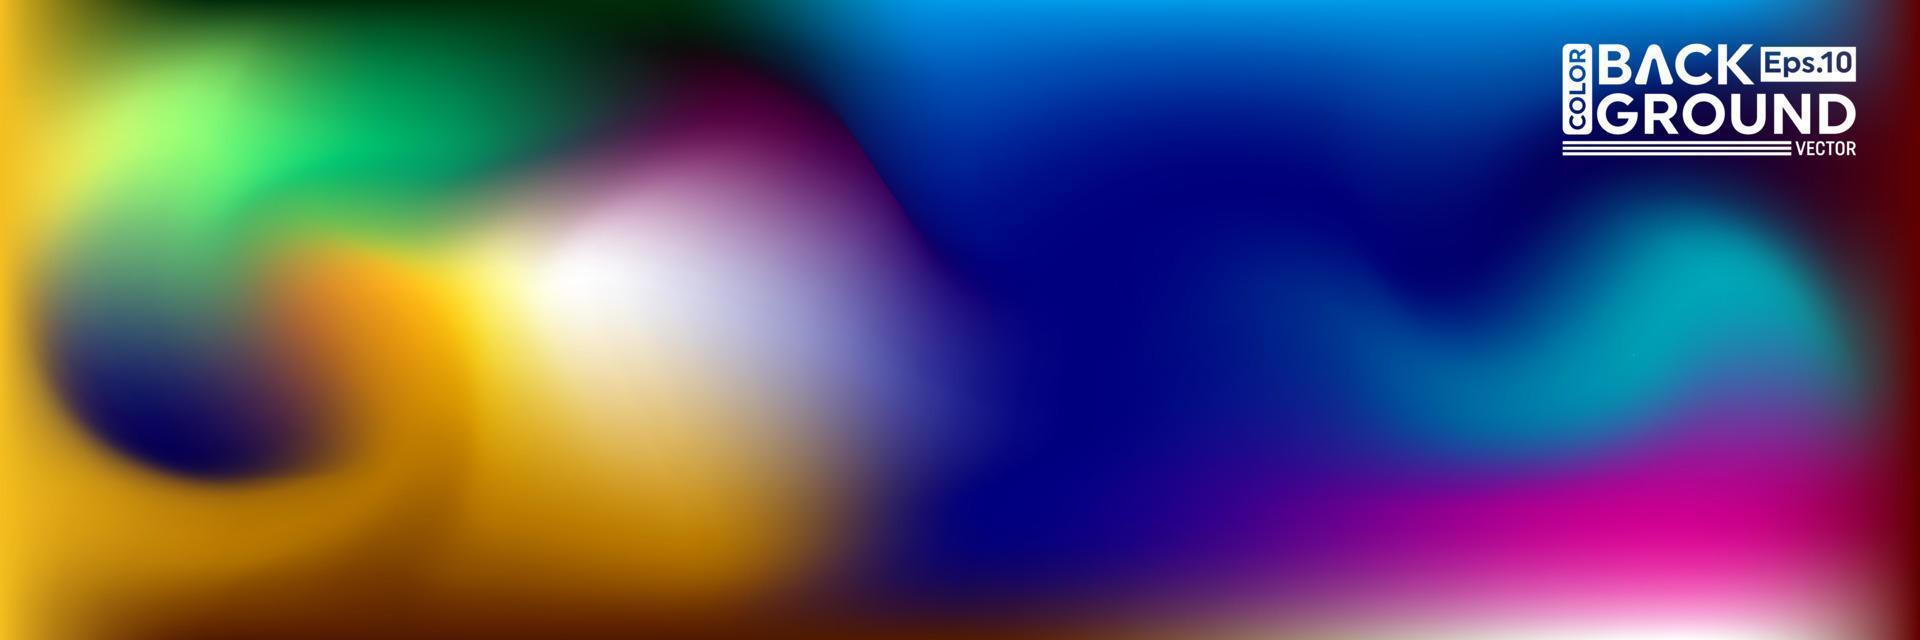 Vivid background vector design. Abstract Modern Colorful Hologram Blur Background Design for web design, colorful, blurry background, wallpaper and mobile display.